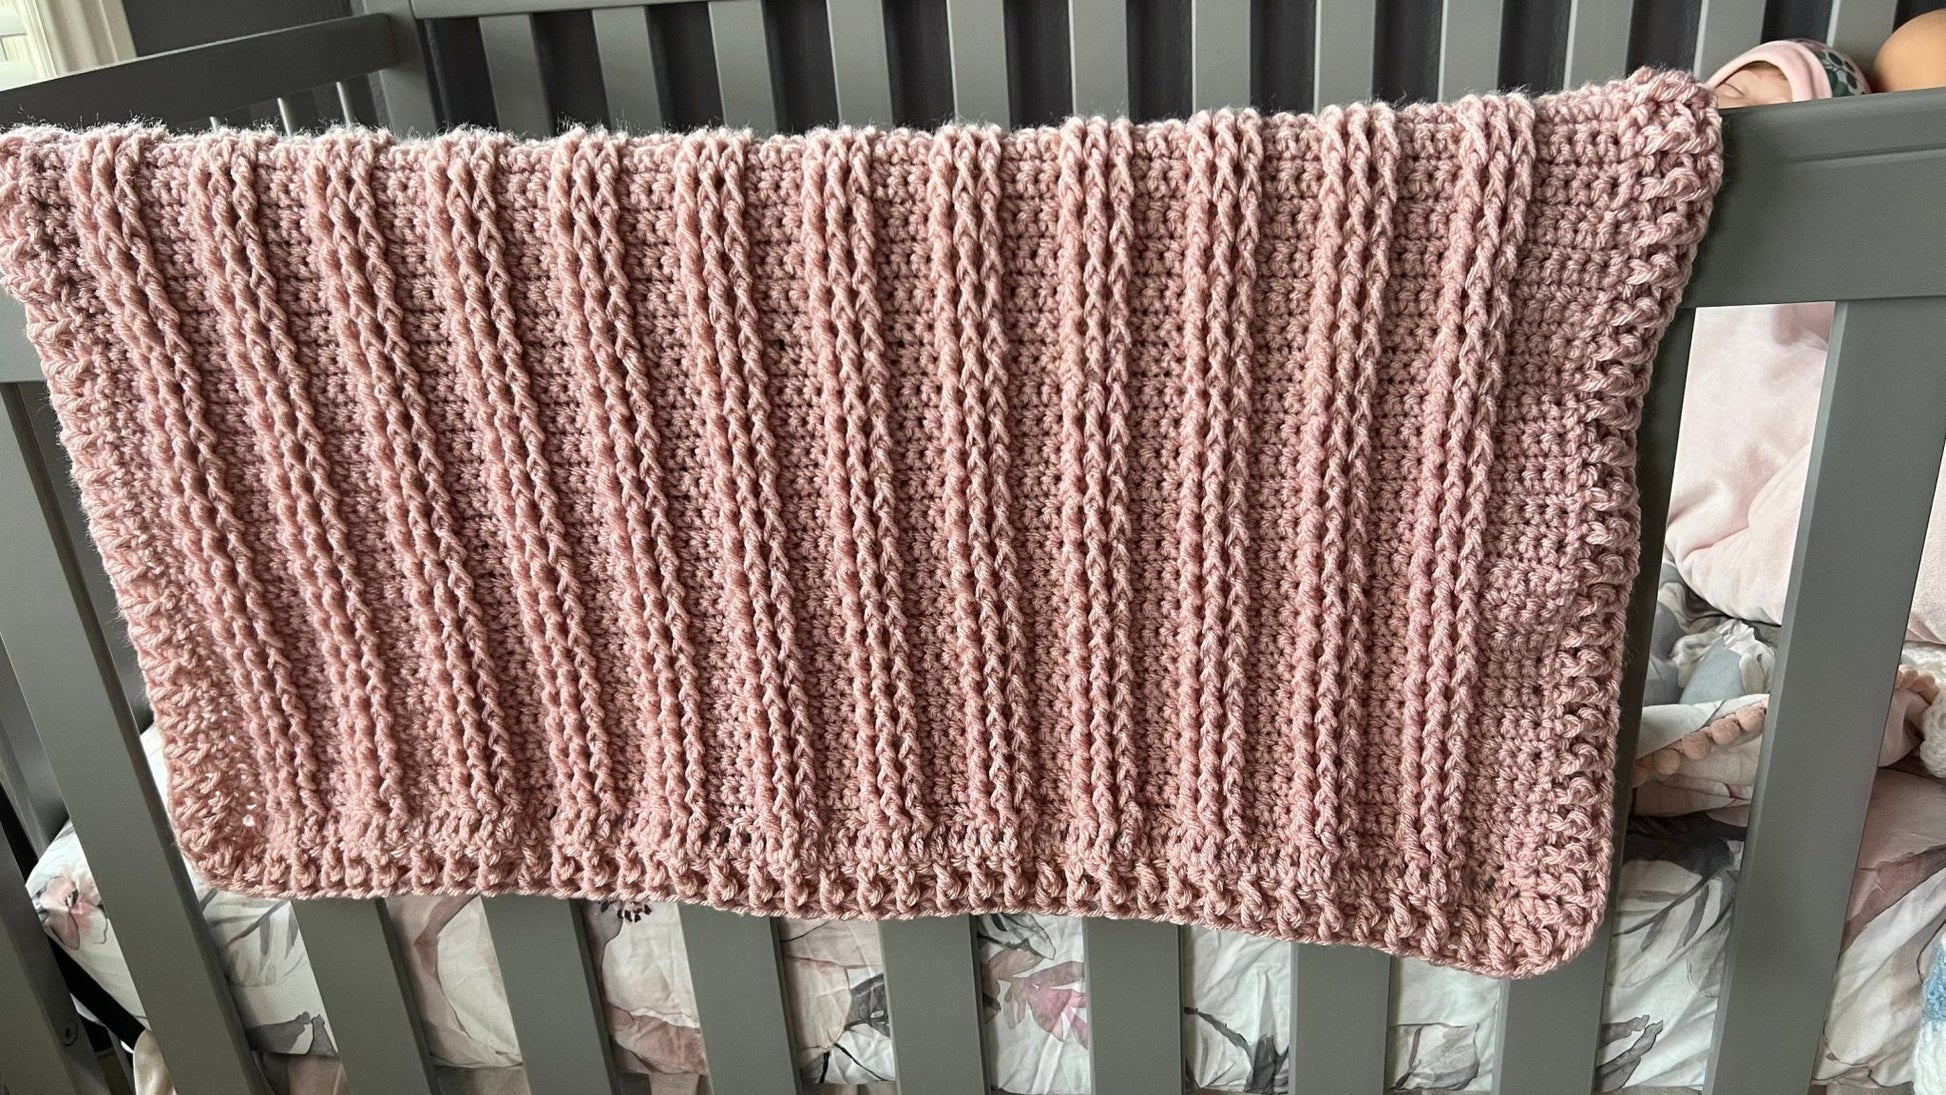 Blanket for baby girl crochet blanket, pink - blanket for baby girl - baby shower gift for baby girl 31”x26”cradle blanket, baby girl gift, - Lilly Grace Sparkle Boutique